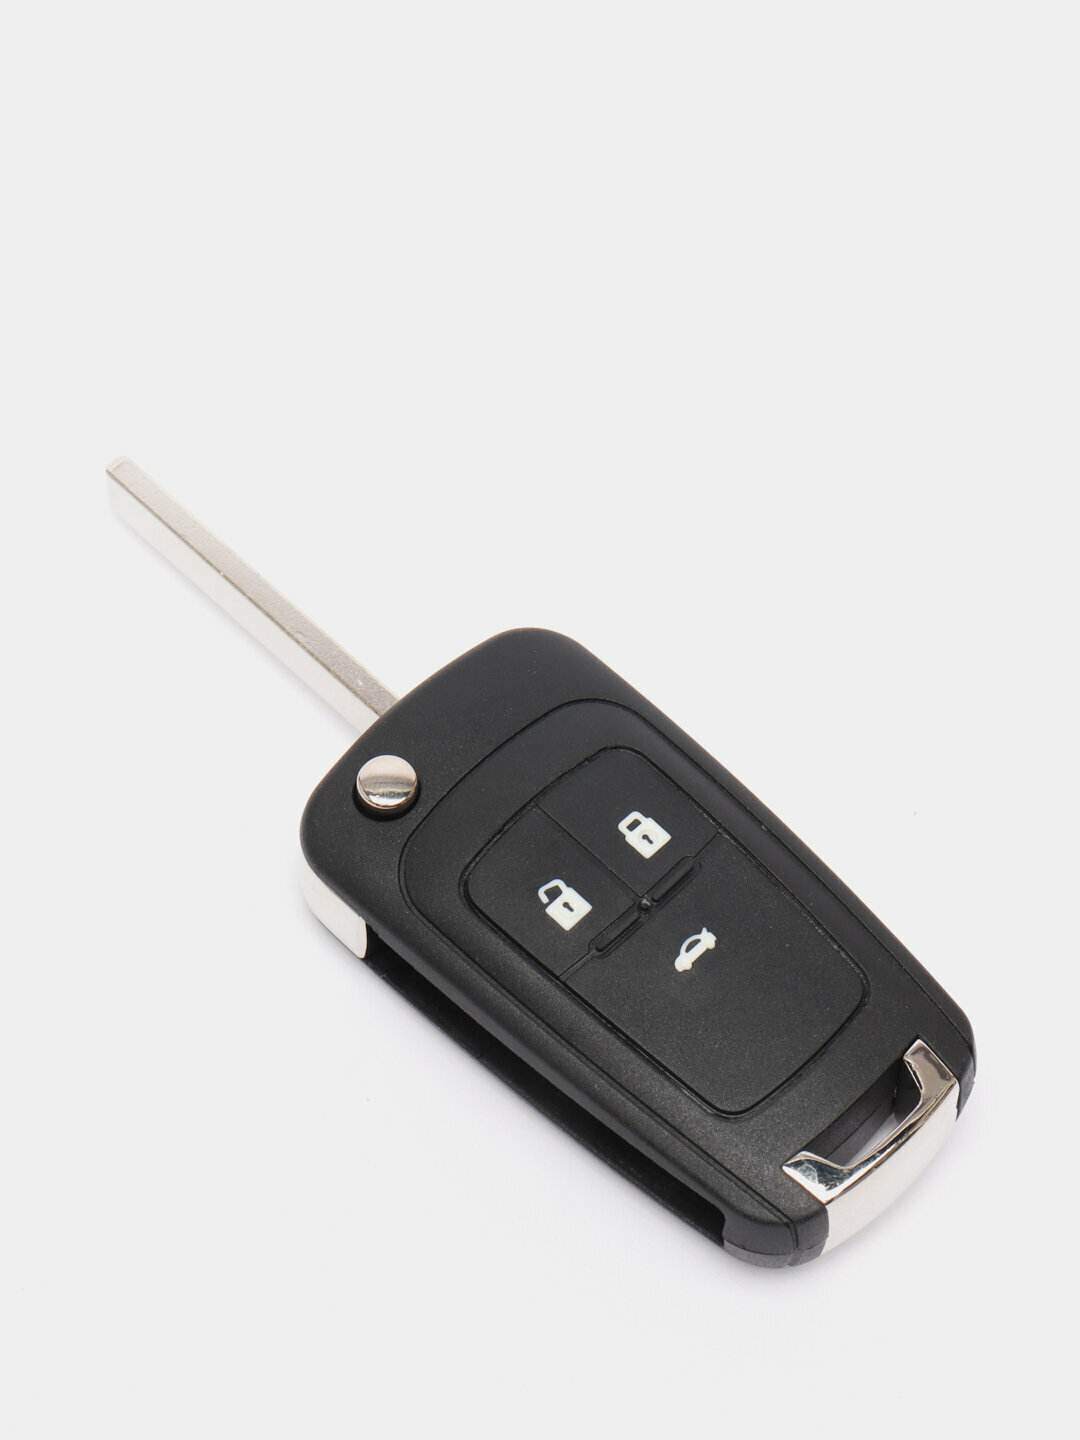 Ключ Chevrolet Шевроле Корпус выкидного ключа Chevrolet 2-3-4-5 кнопок Cruze Aveo Cobalt Количество кнопок Отверткаотвертка крестовая